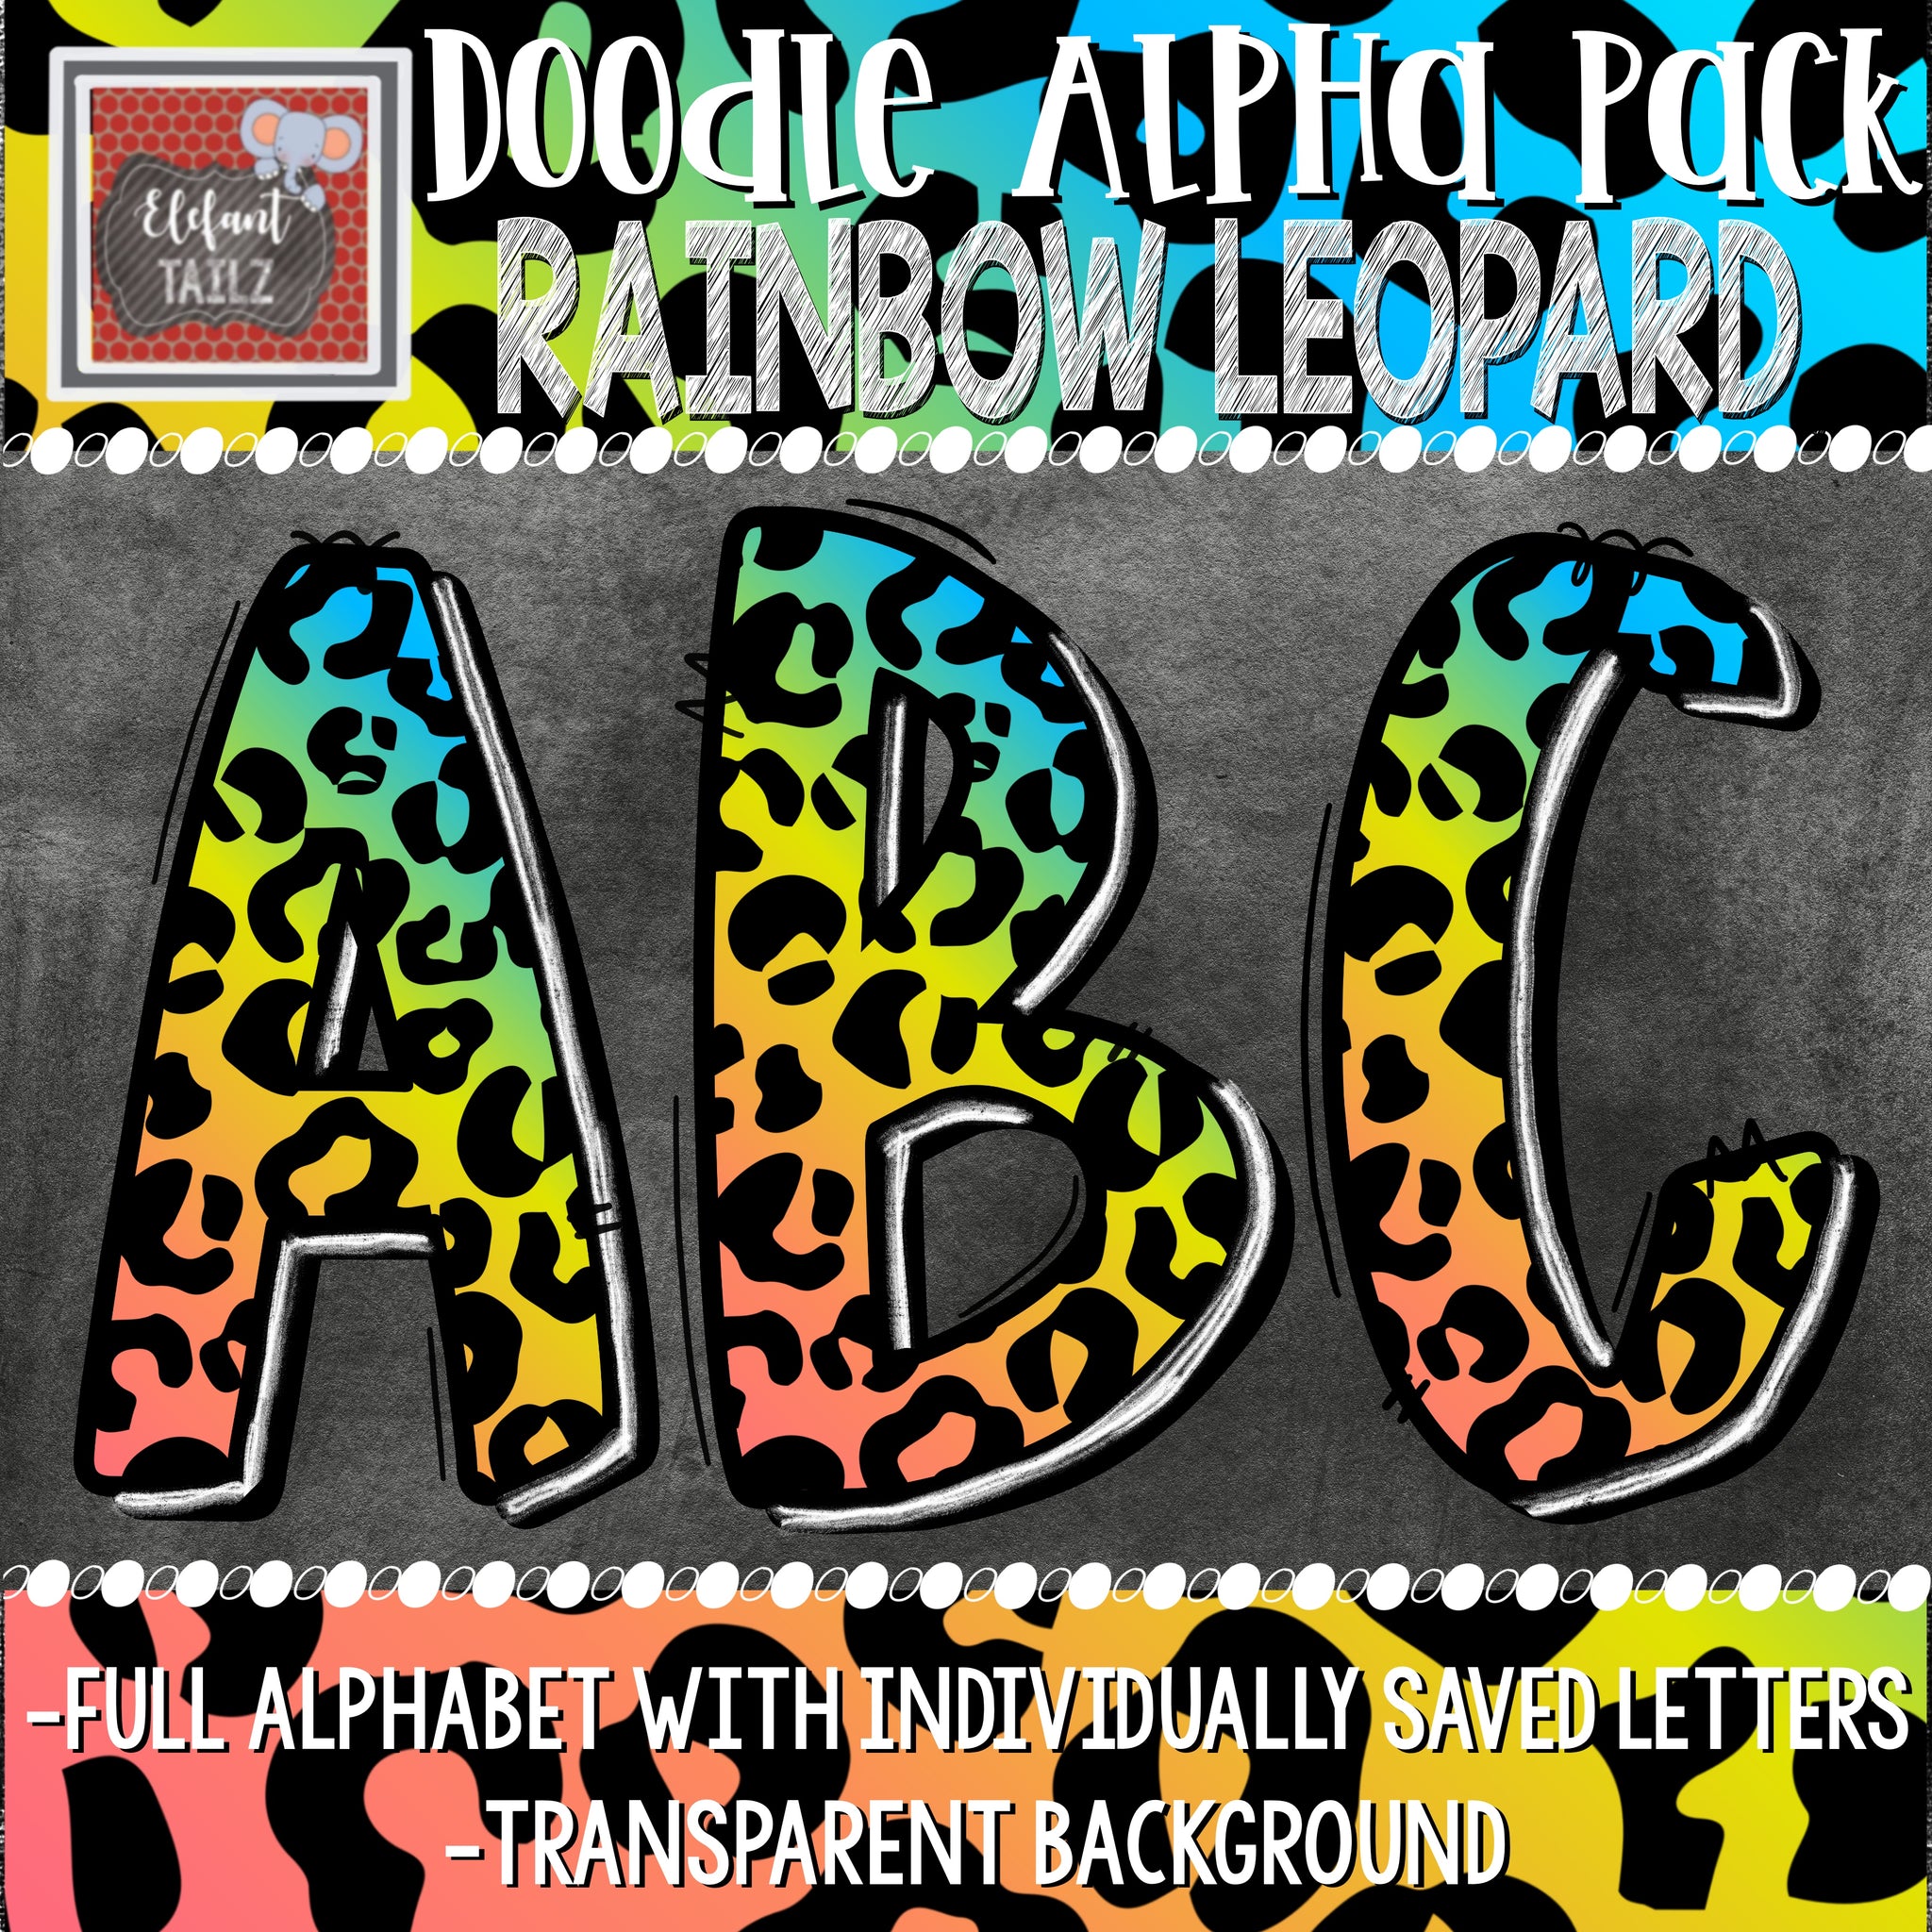 Doodle Alpha - Rainbow Leopard